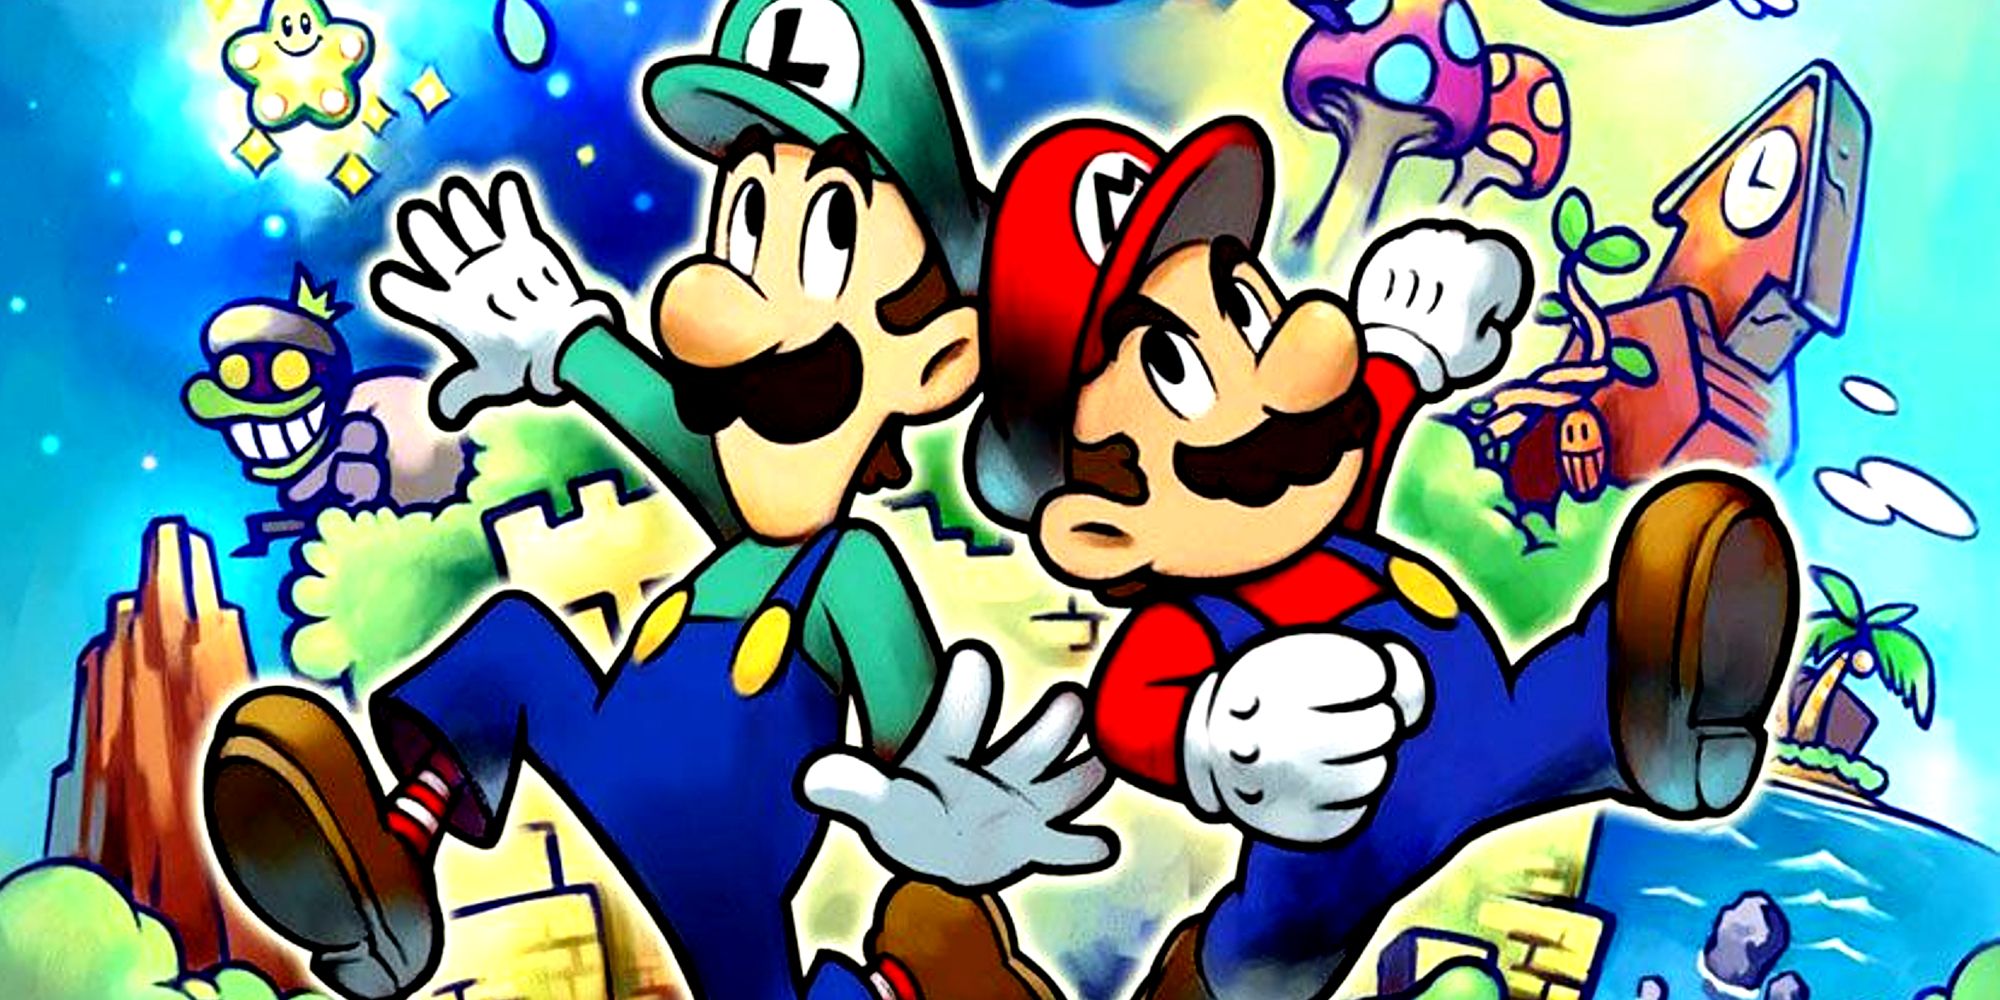 Mario and Luigi Superstar Saga RPG Video Game